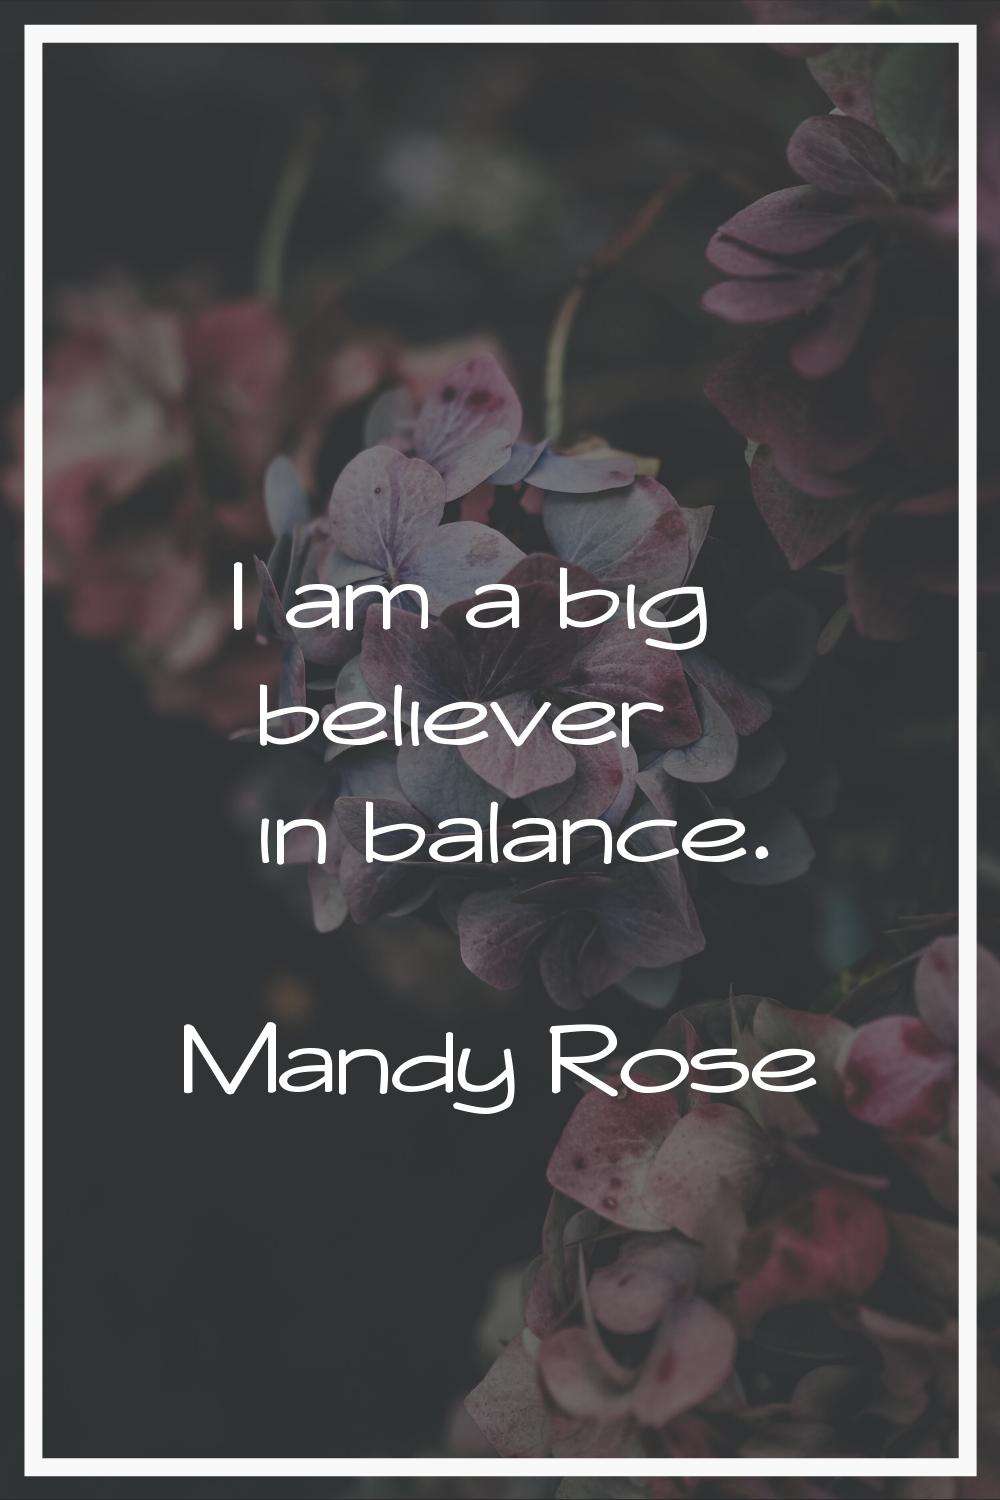 I am a big believer in balance.